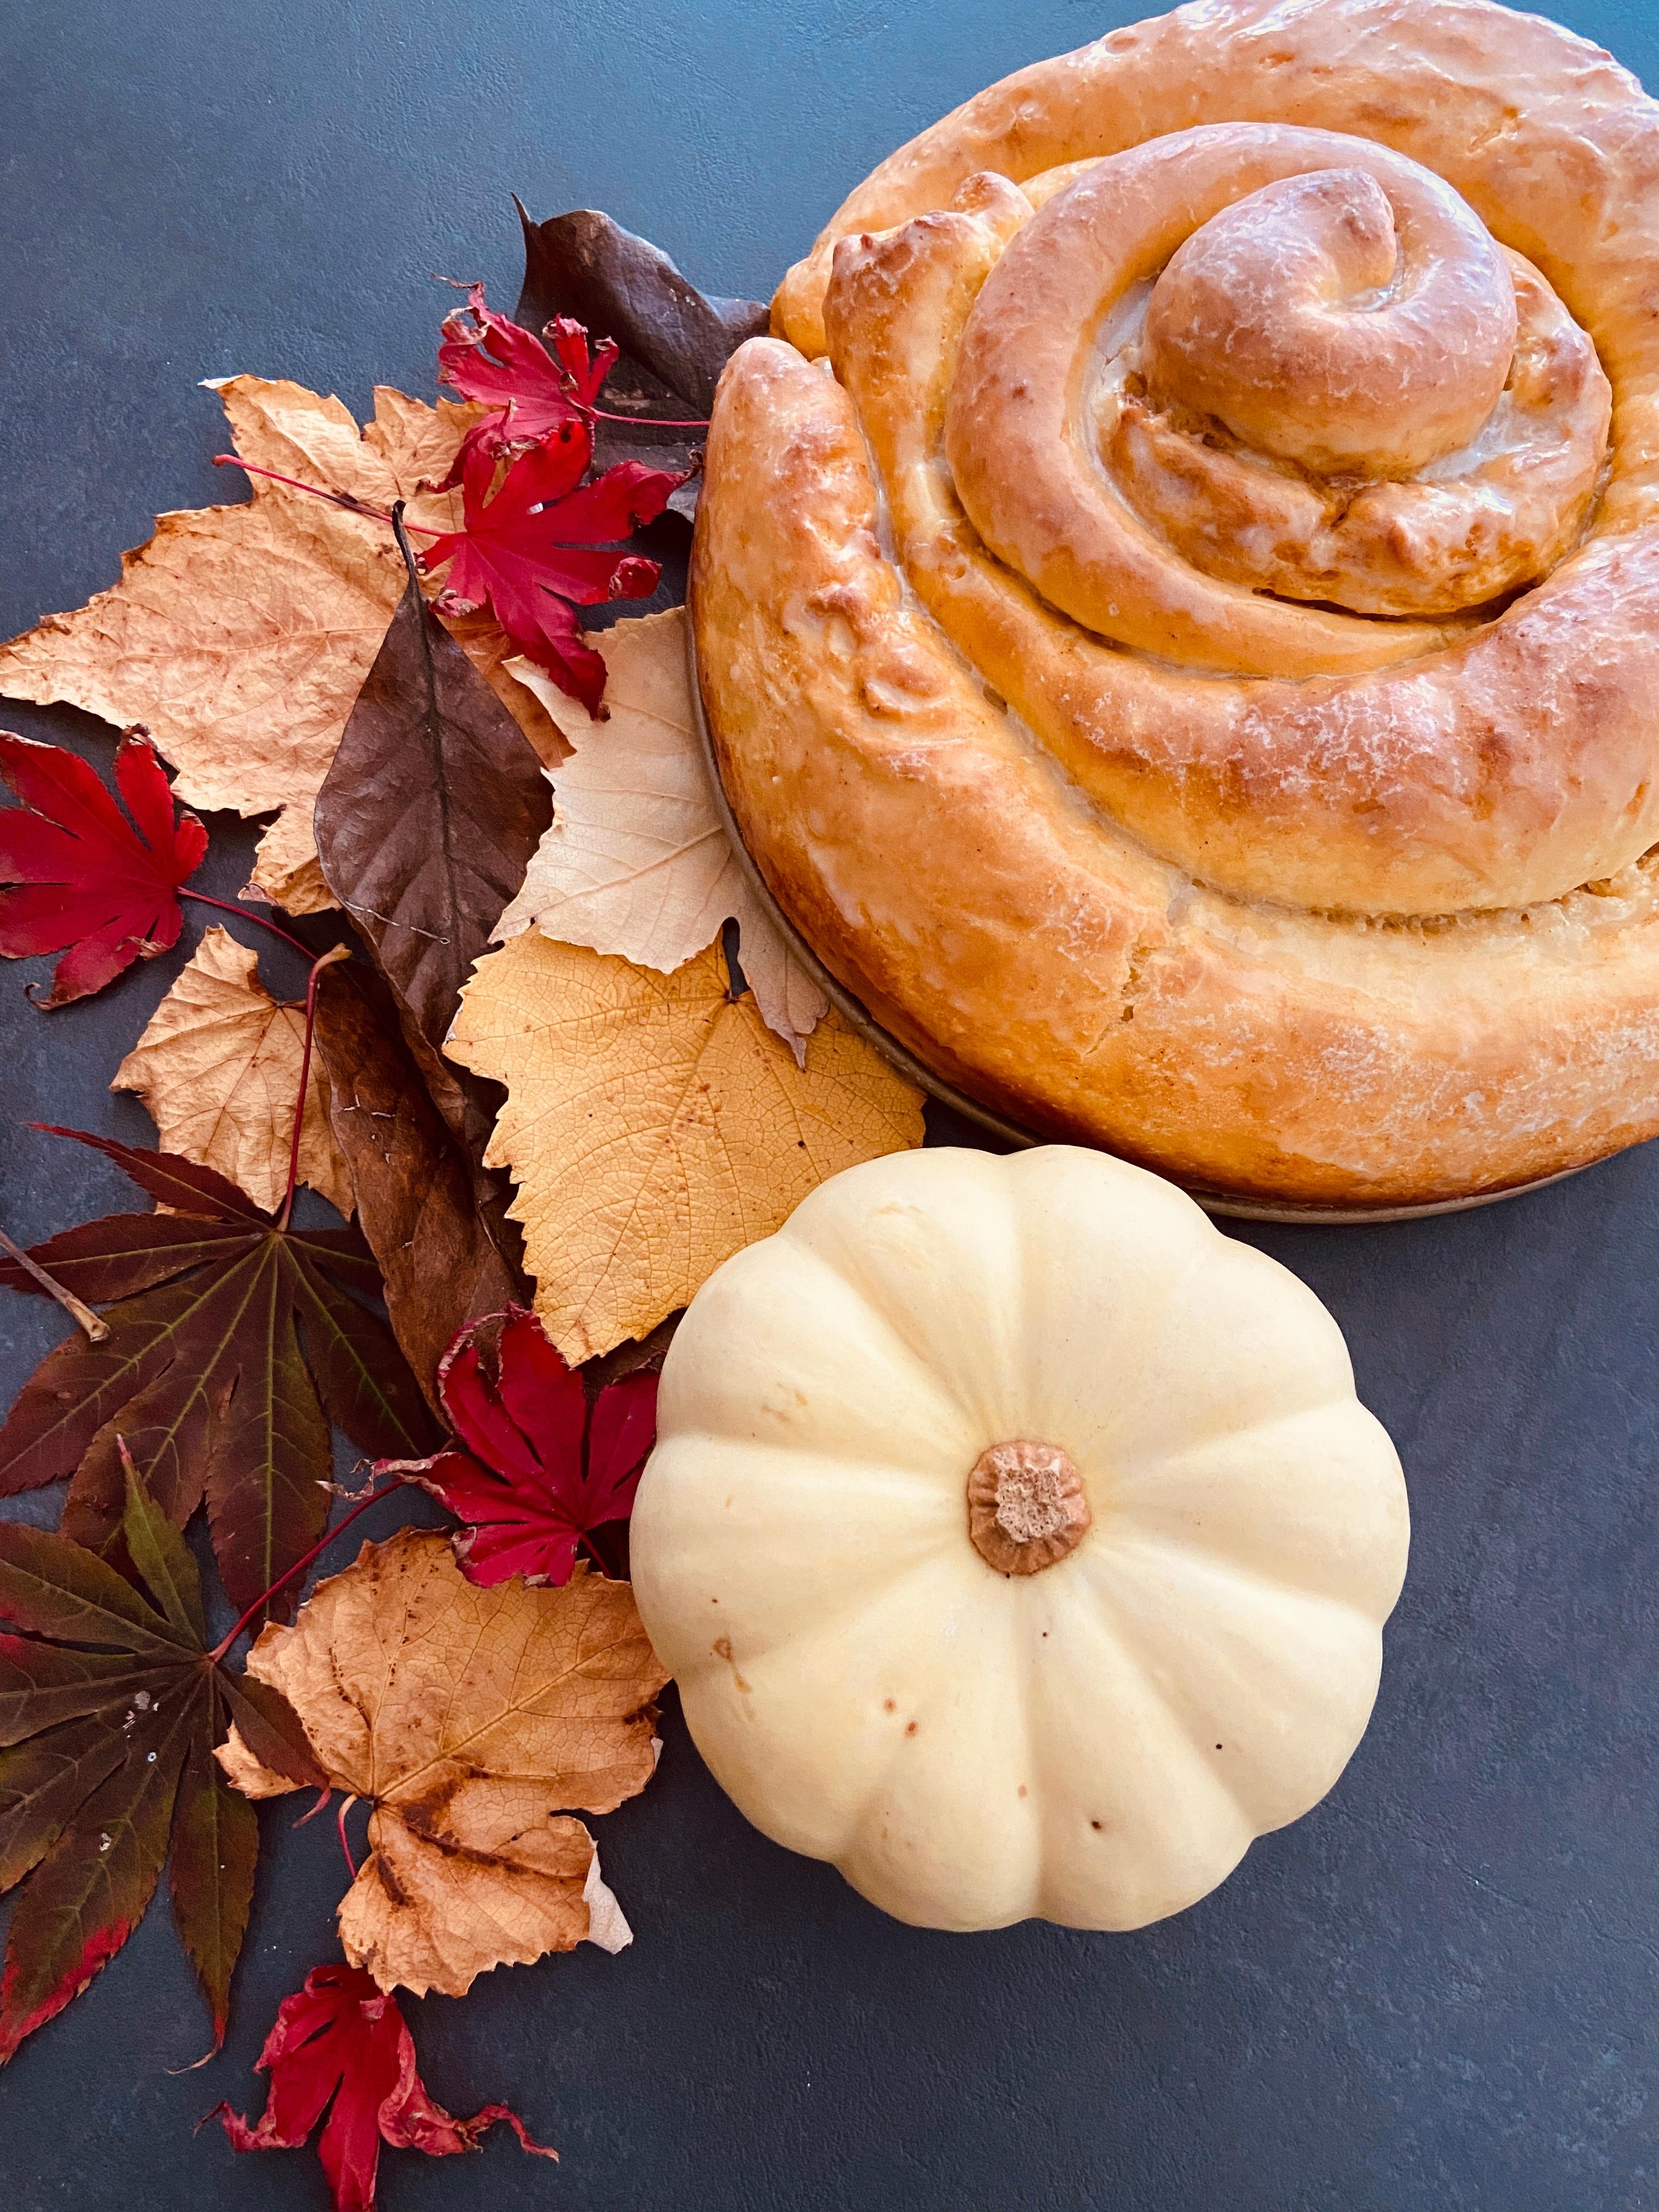 Pumpkin Spice Bun 🎃
#pumpkinspice#cinnamonbun#autumncomes#fall#autumn#cozyseason#herbstrezepte#pumpkinseason#baking